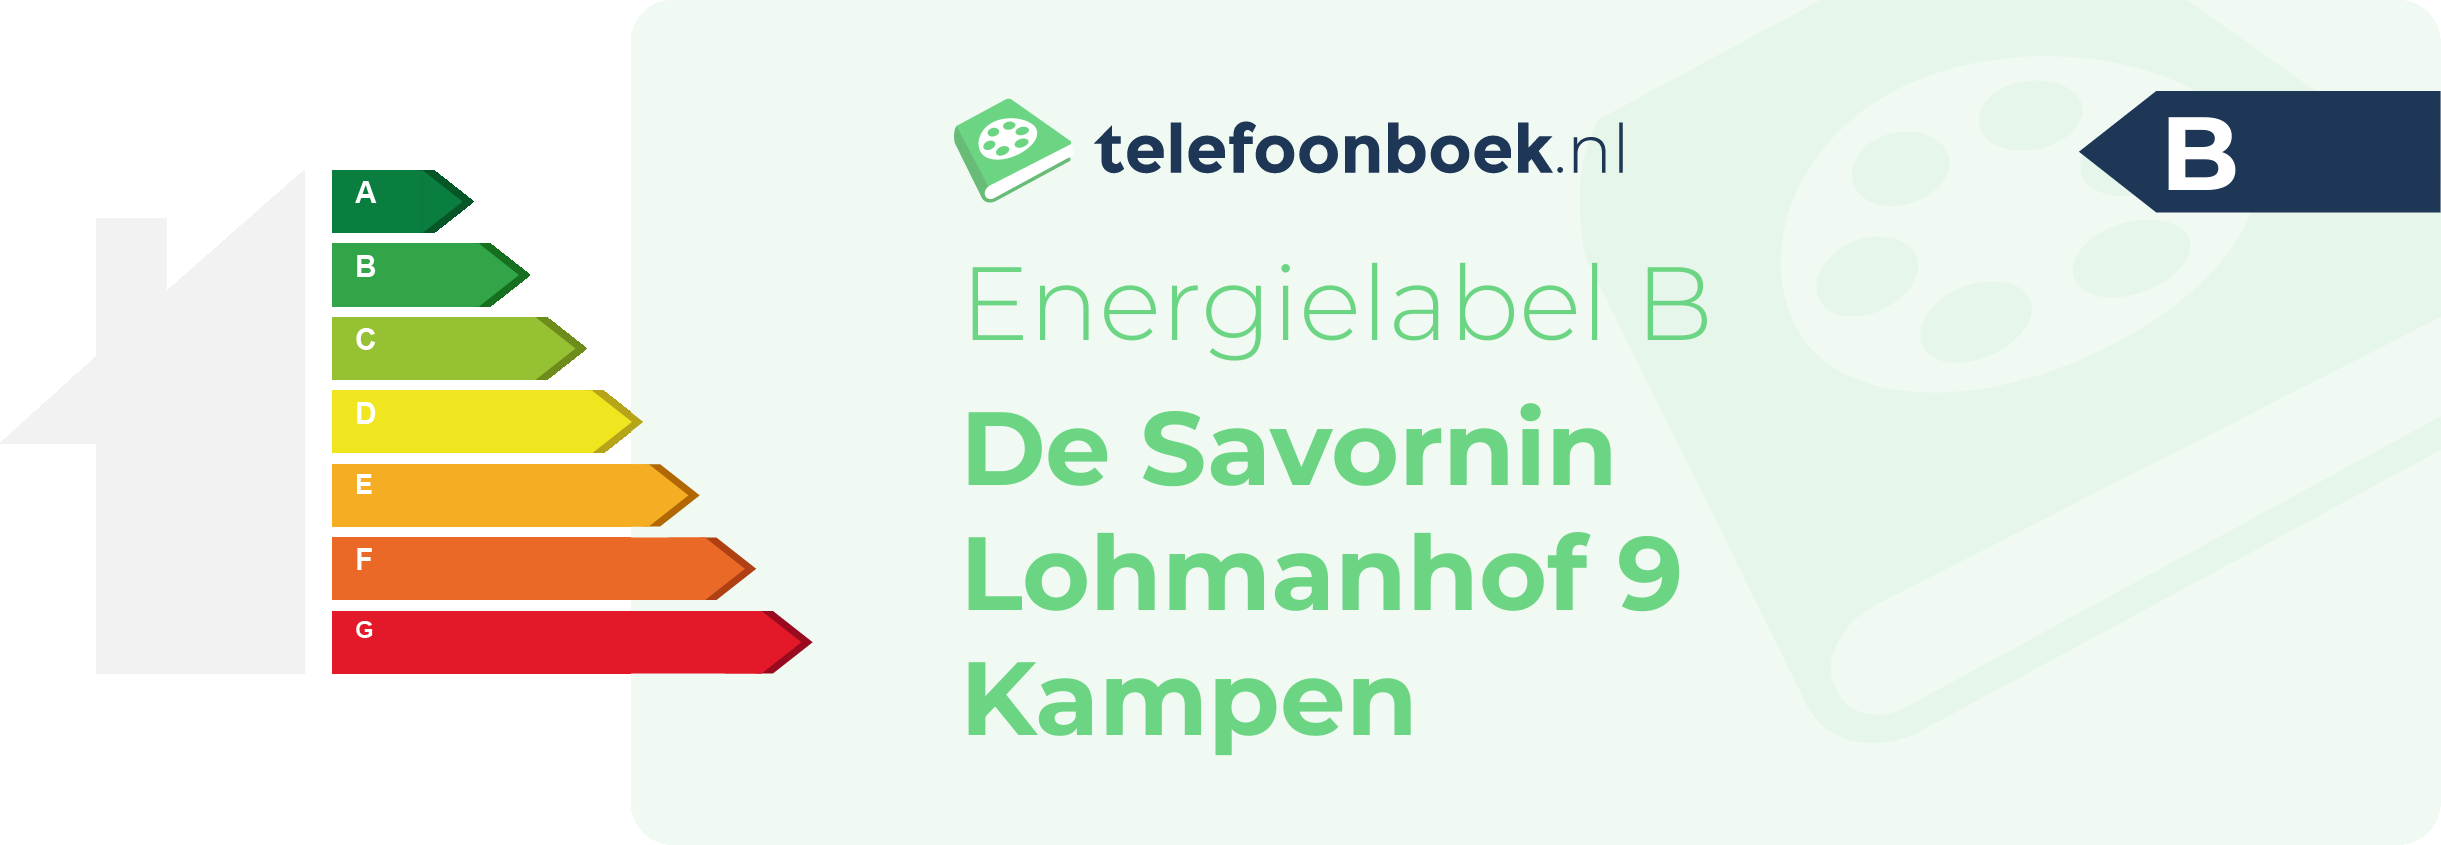 Energielabel De Savornin Lohmanhof 9 Kampen